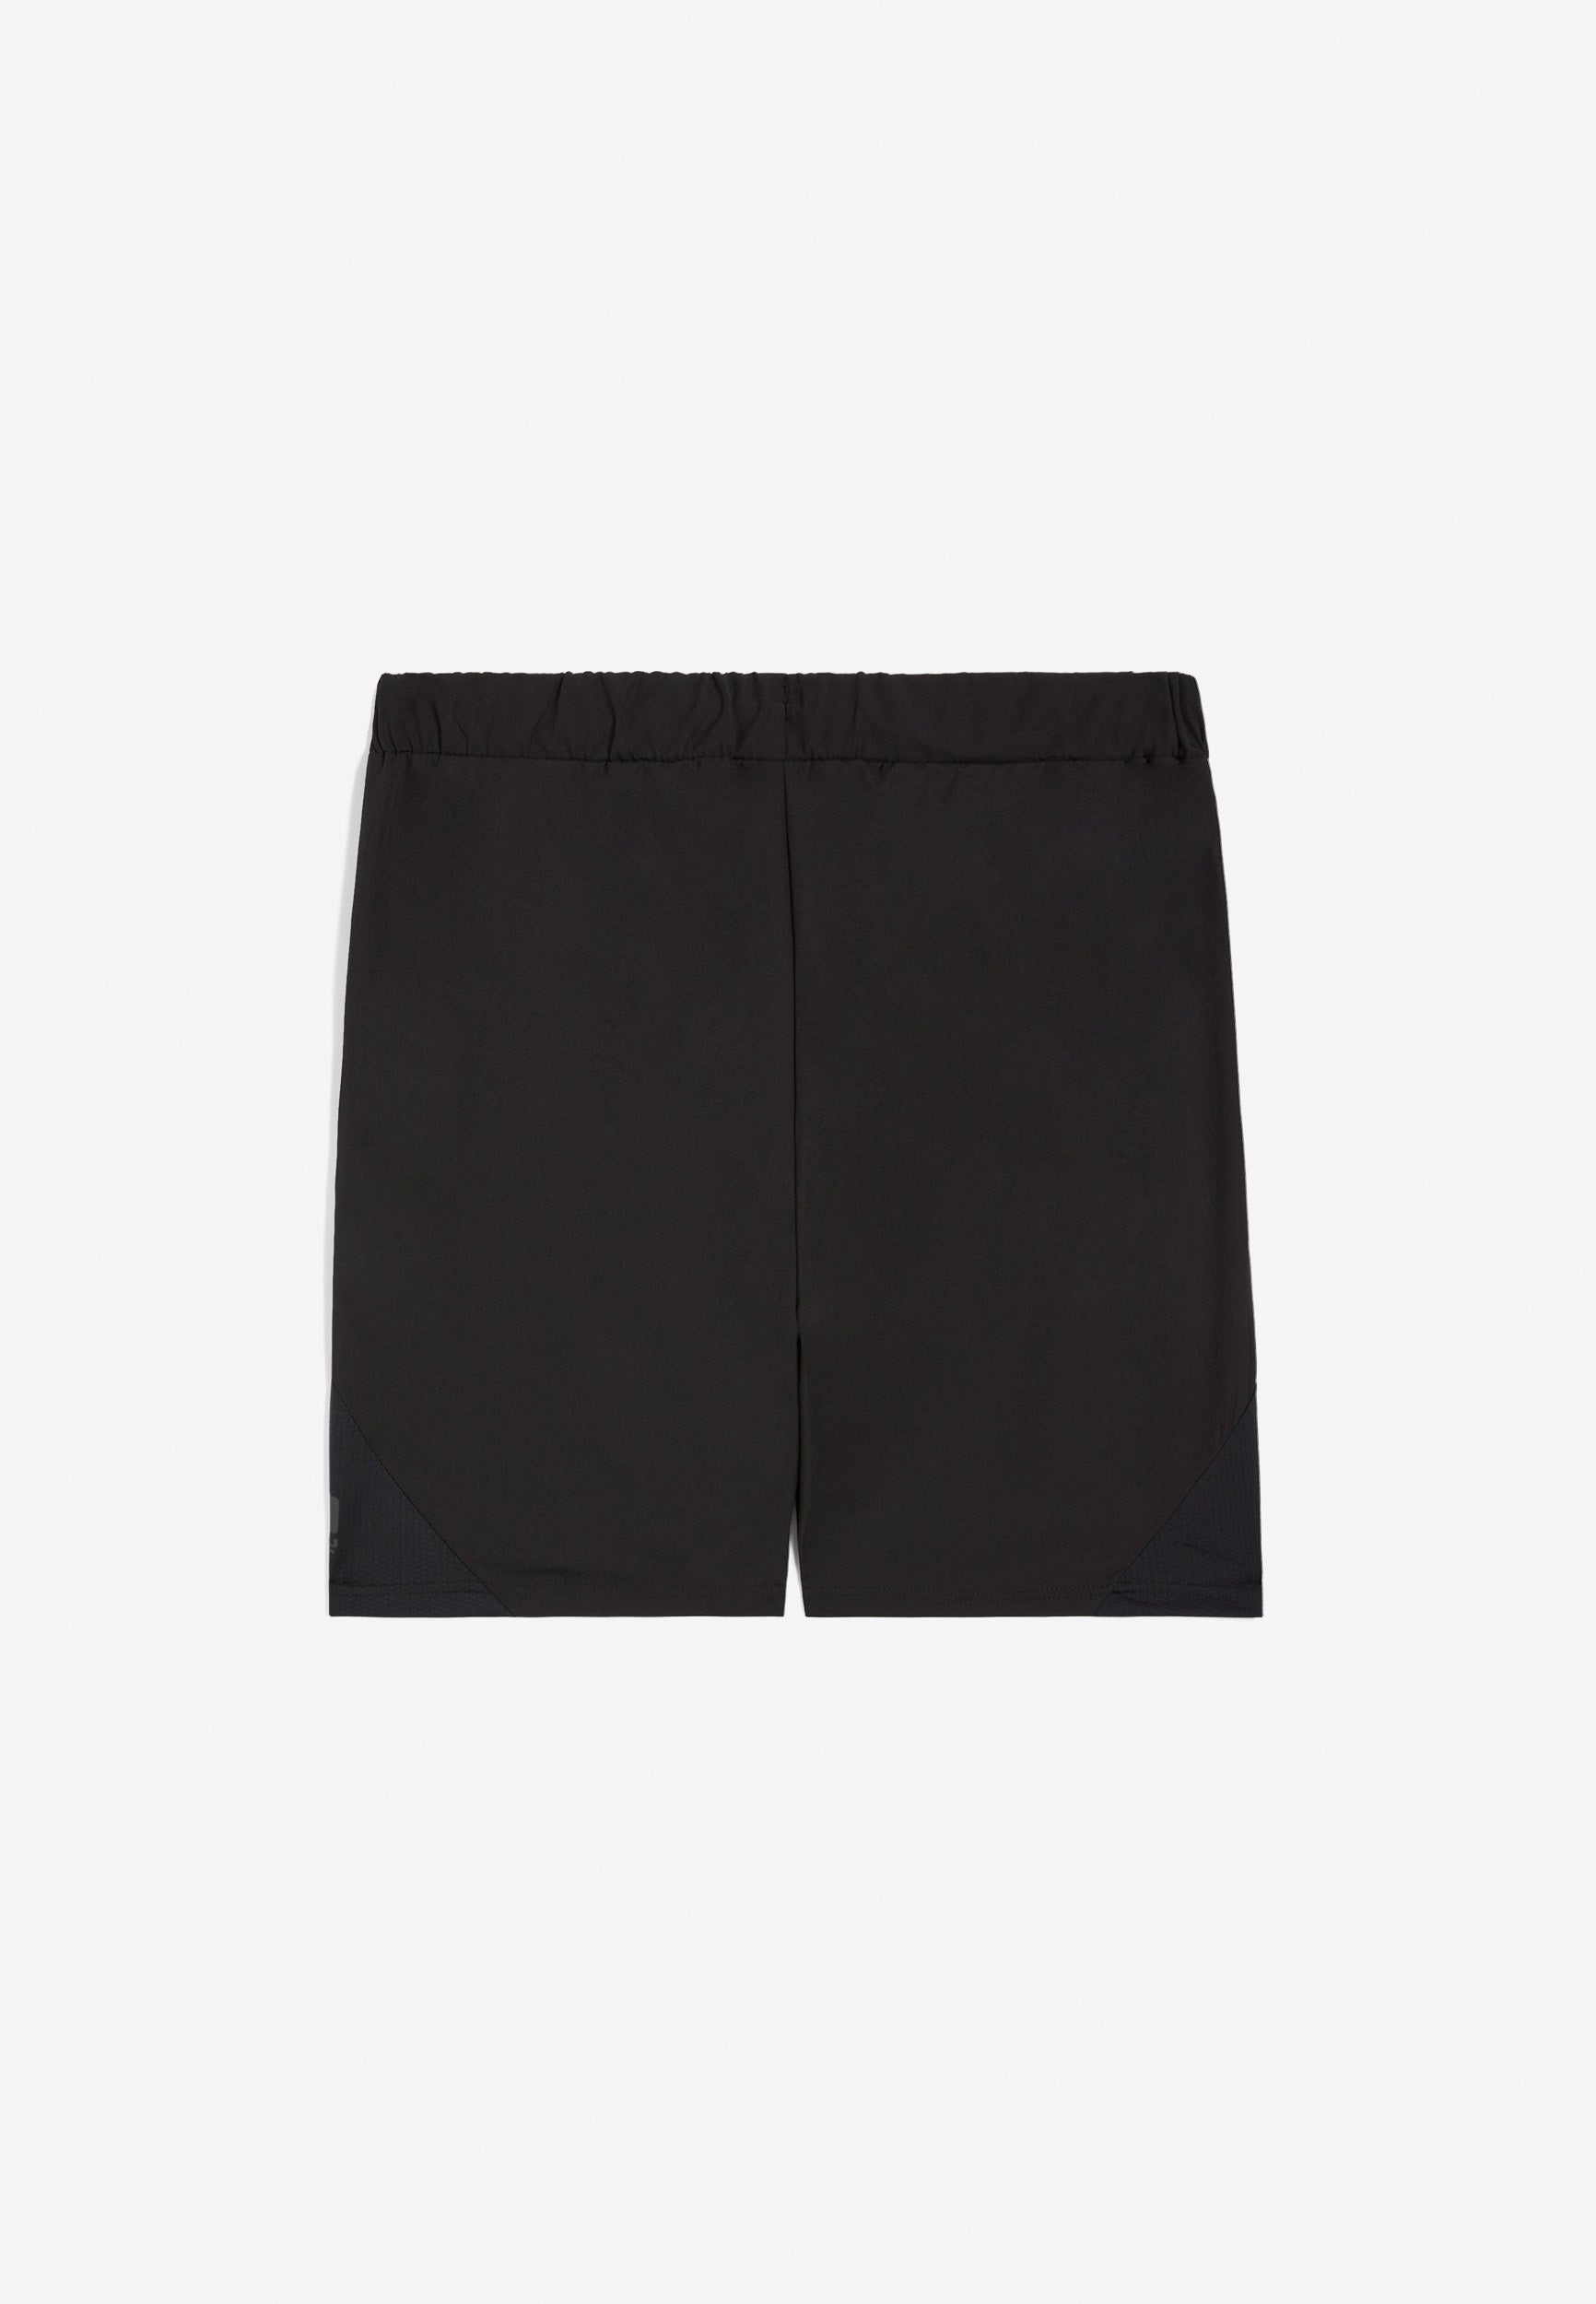 Men's Breathable Shorts - Black 2